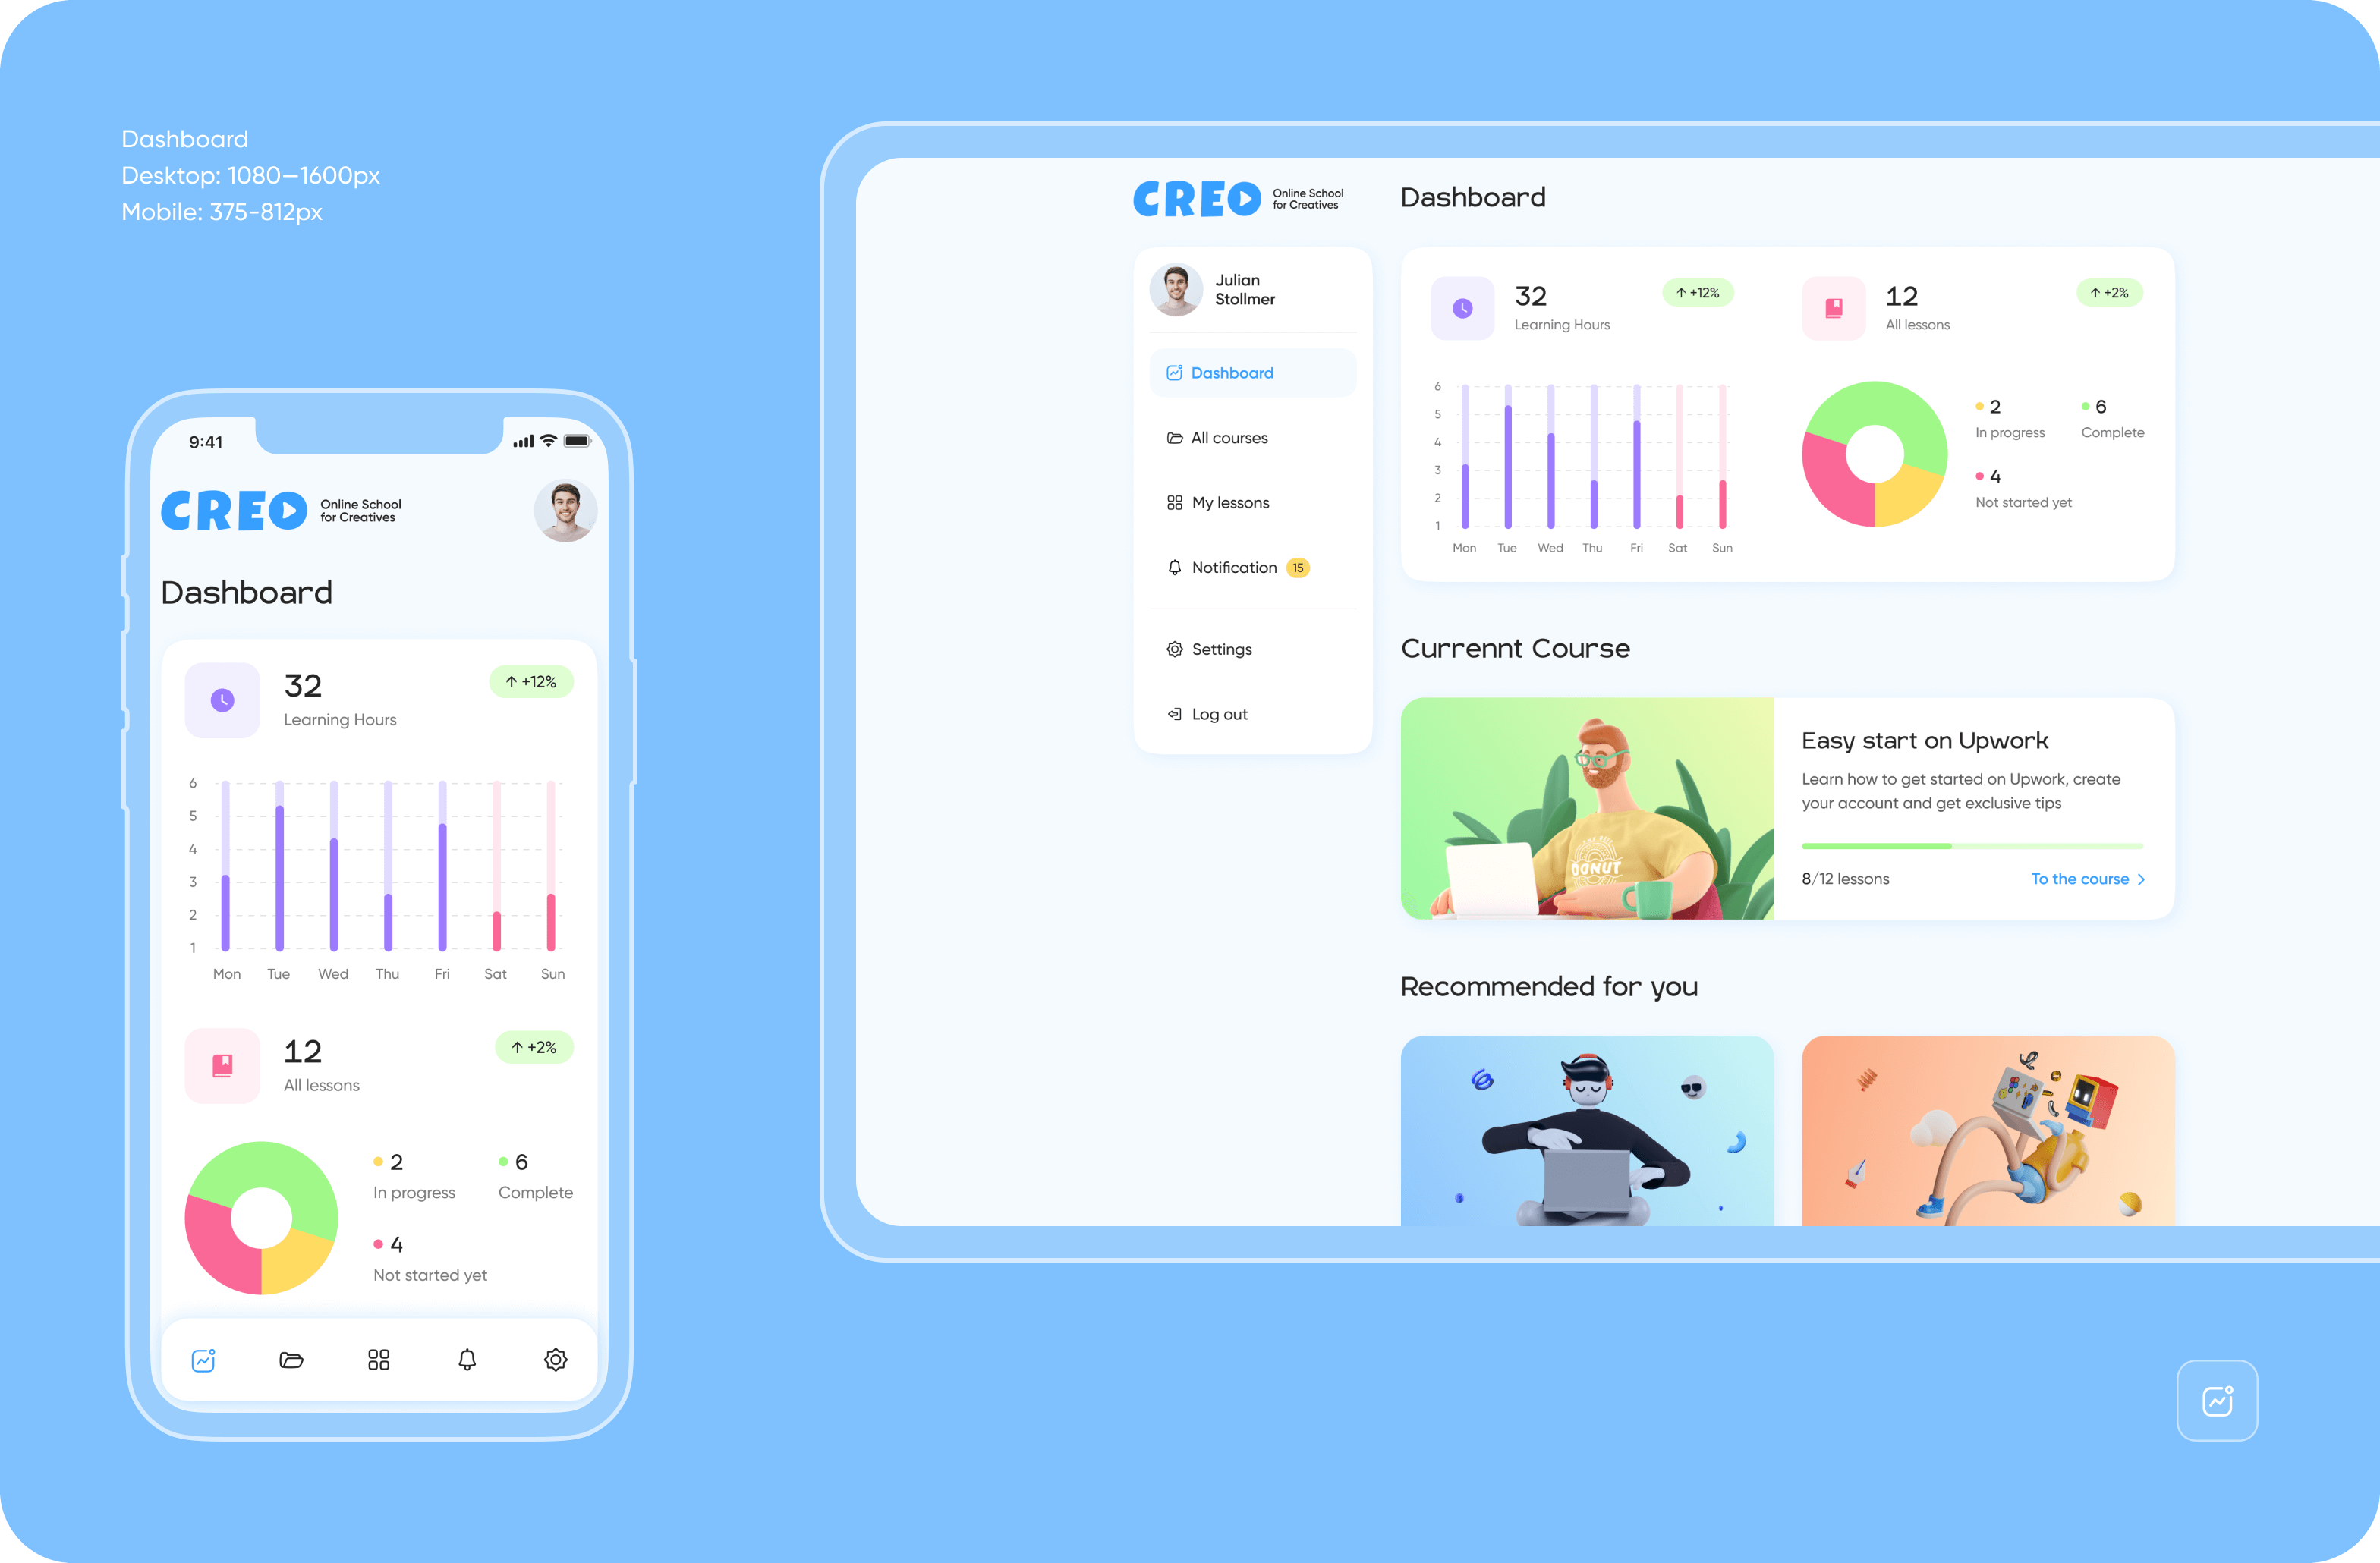 creo-case-preview-desktop.png - Development of online education platform for designers Creo - goodface.agency